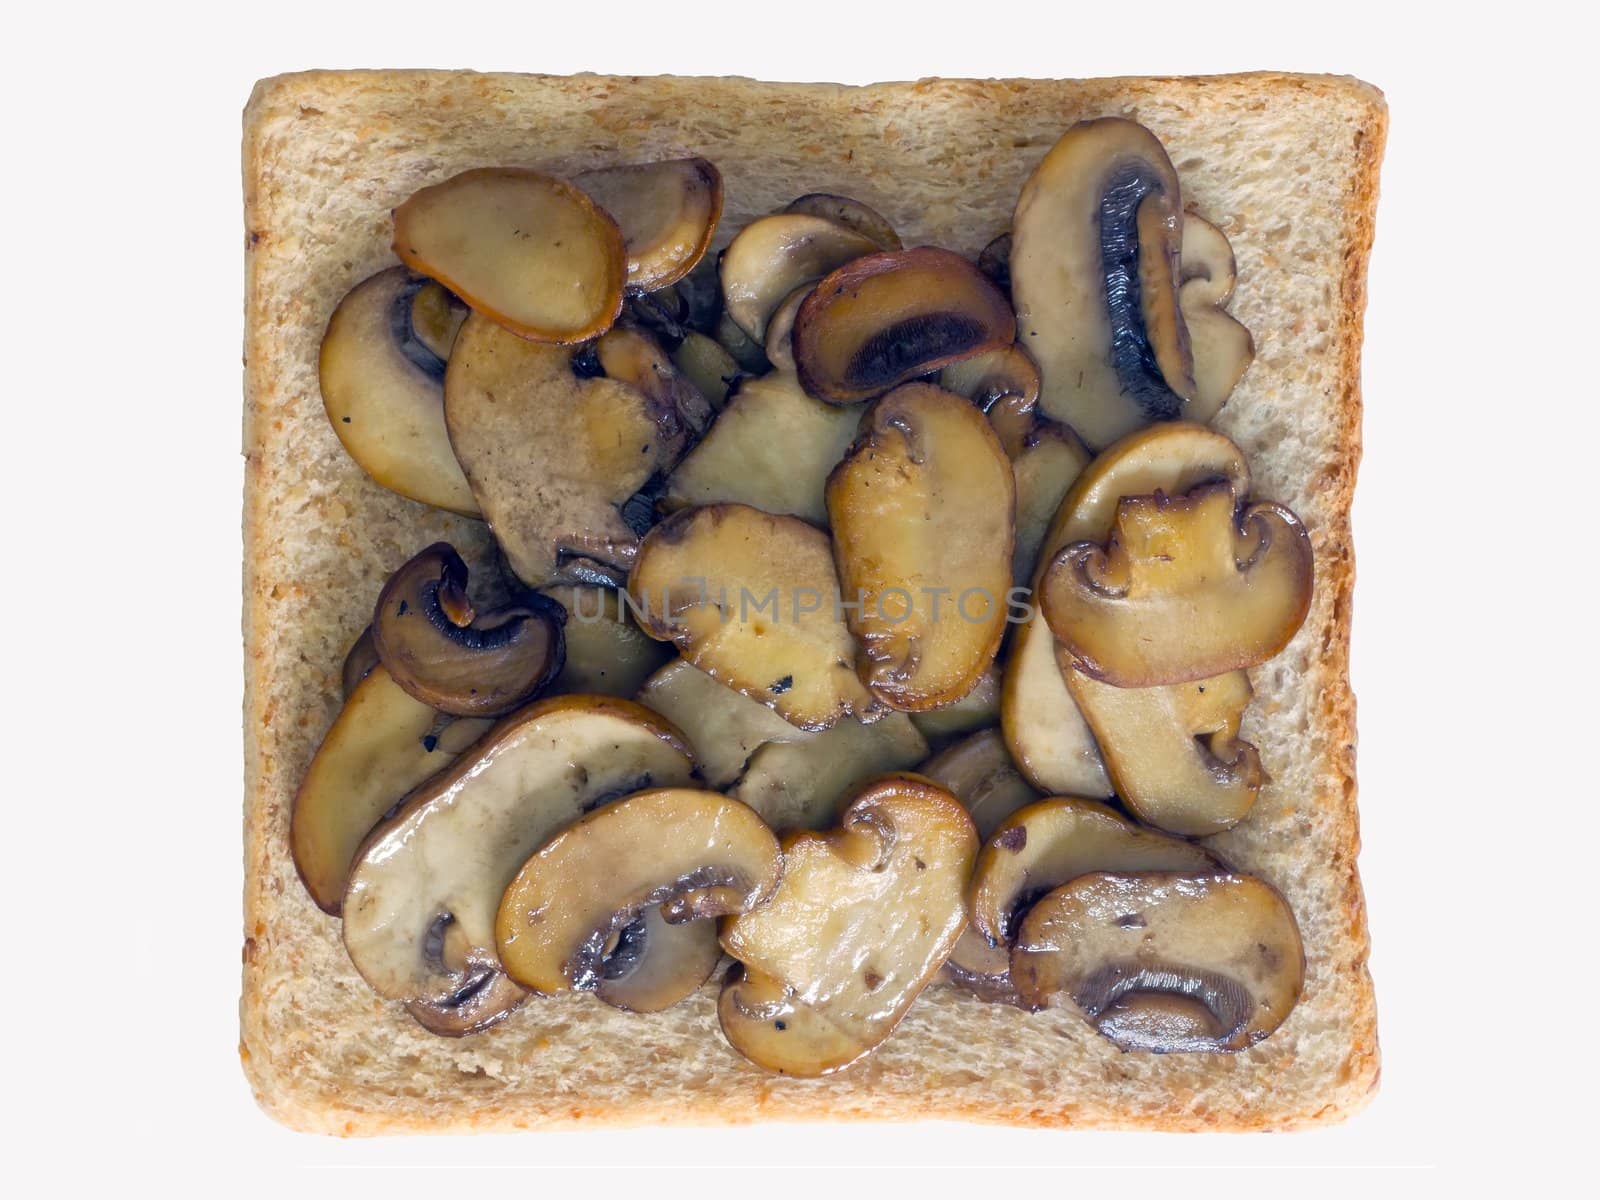 mushroom sandwich